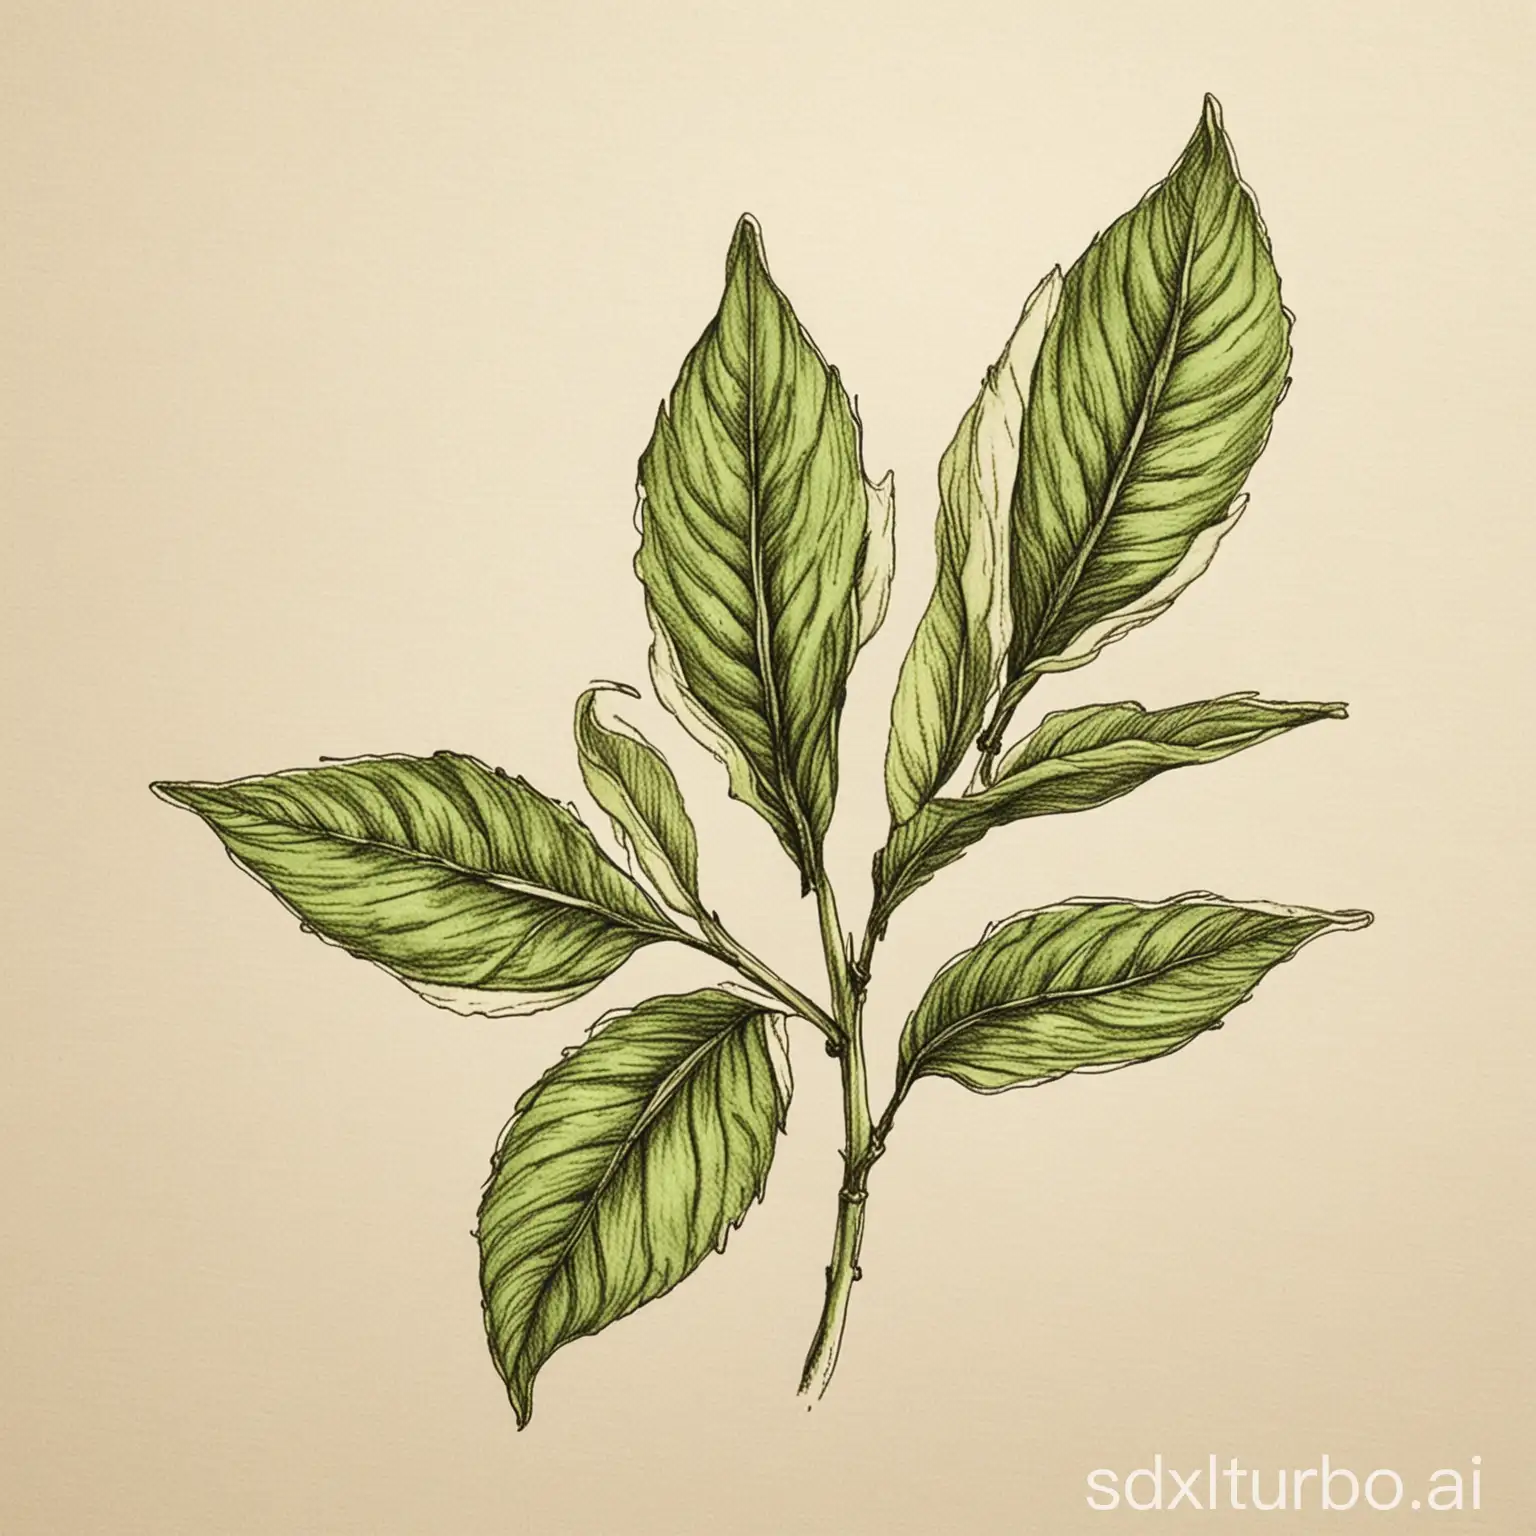 Tea-Leaf-HandDrawn-Art-Serene-Nature-Scene-with-Intricate-Patterns